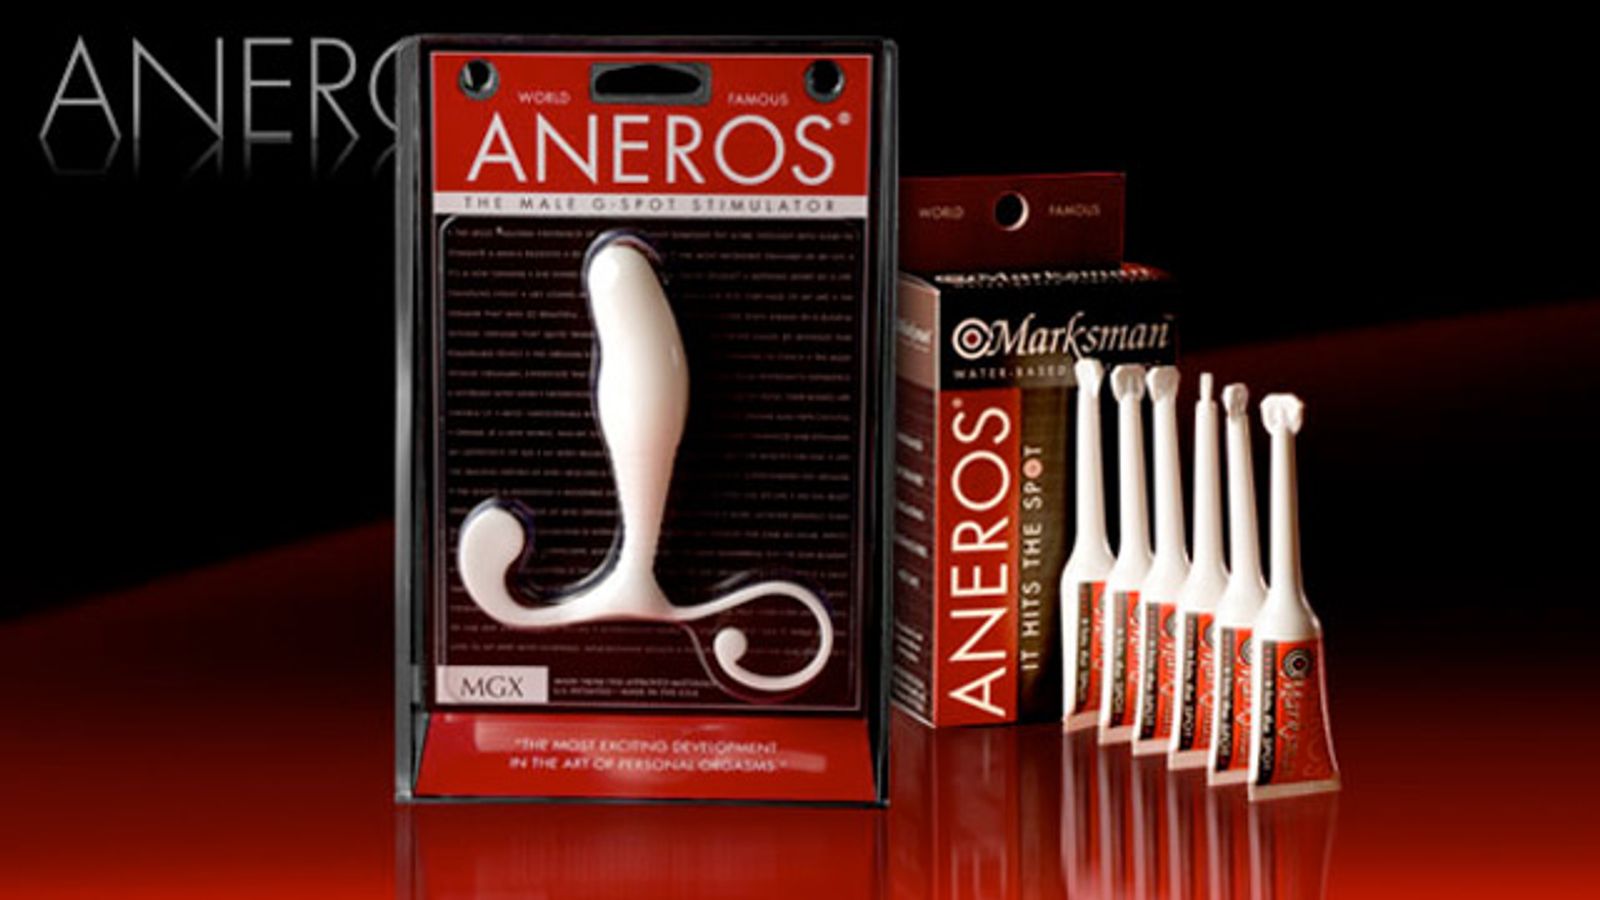 Aneros Announces Retailer Campaign at International Lingerie Show